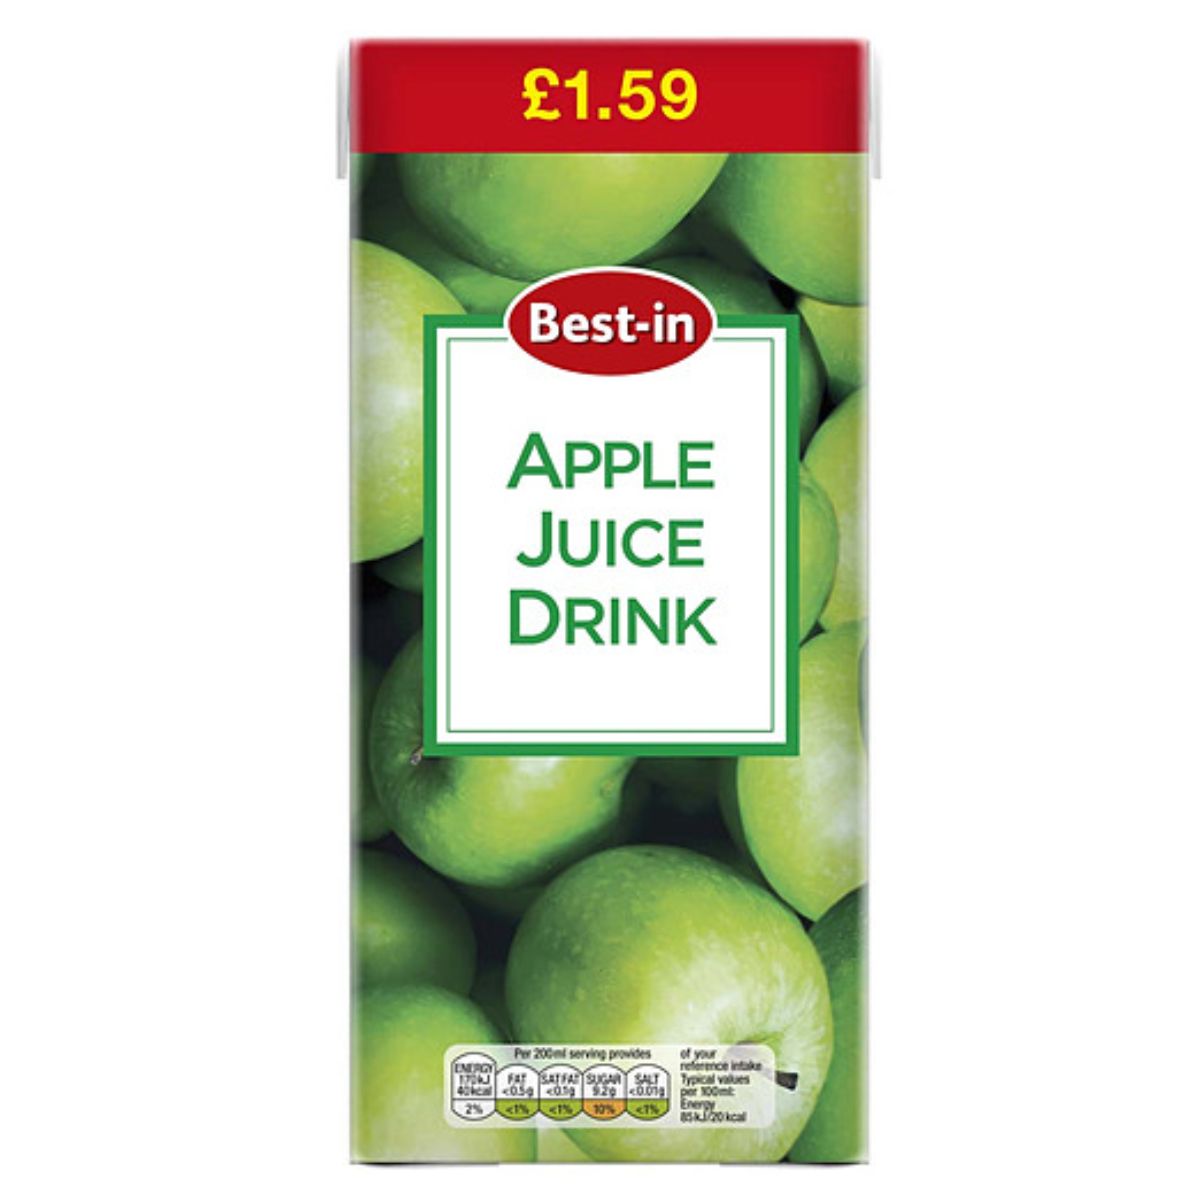 Best In - Apple Juice Drink - 1 Litre is the best apple juice drink.